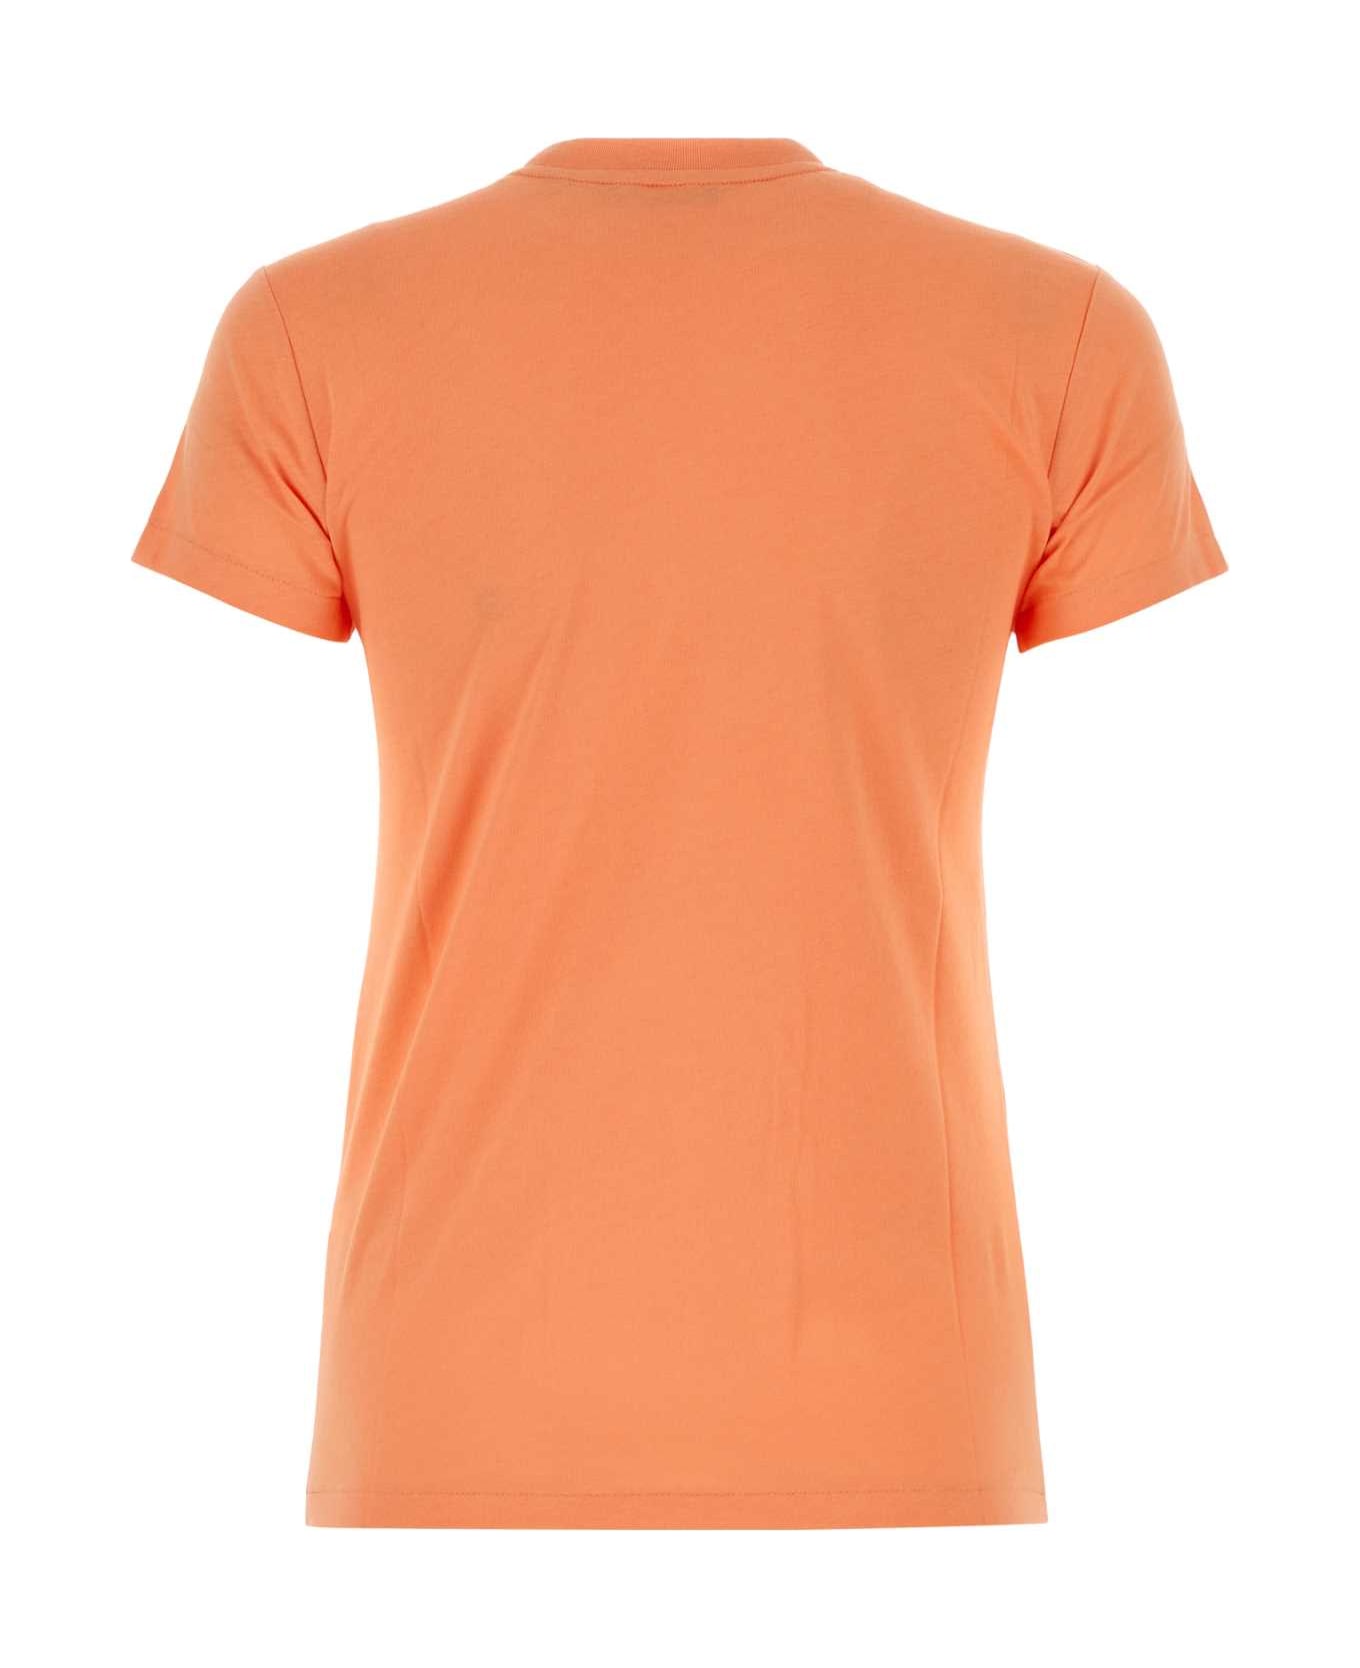 Polo Ralph Lauren Orange Cotton T-shirt - PEACHTREE